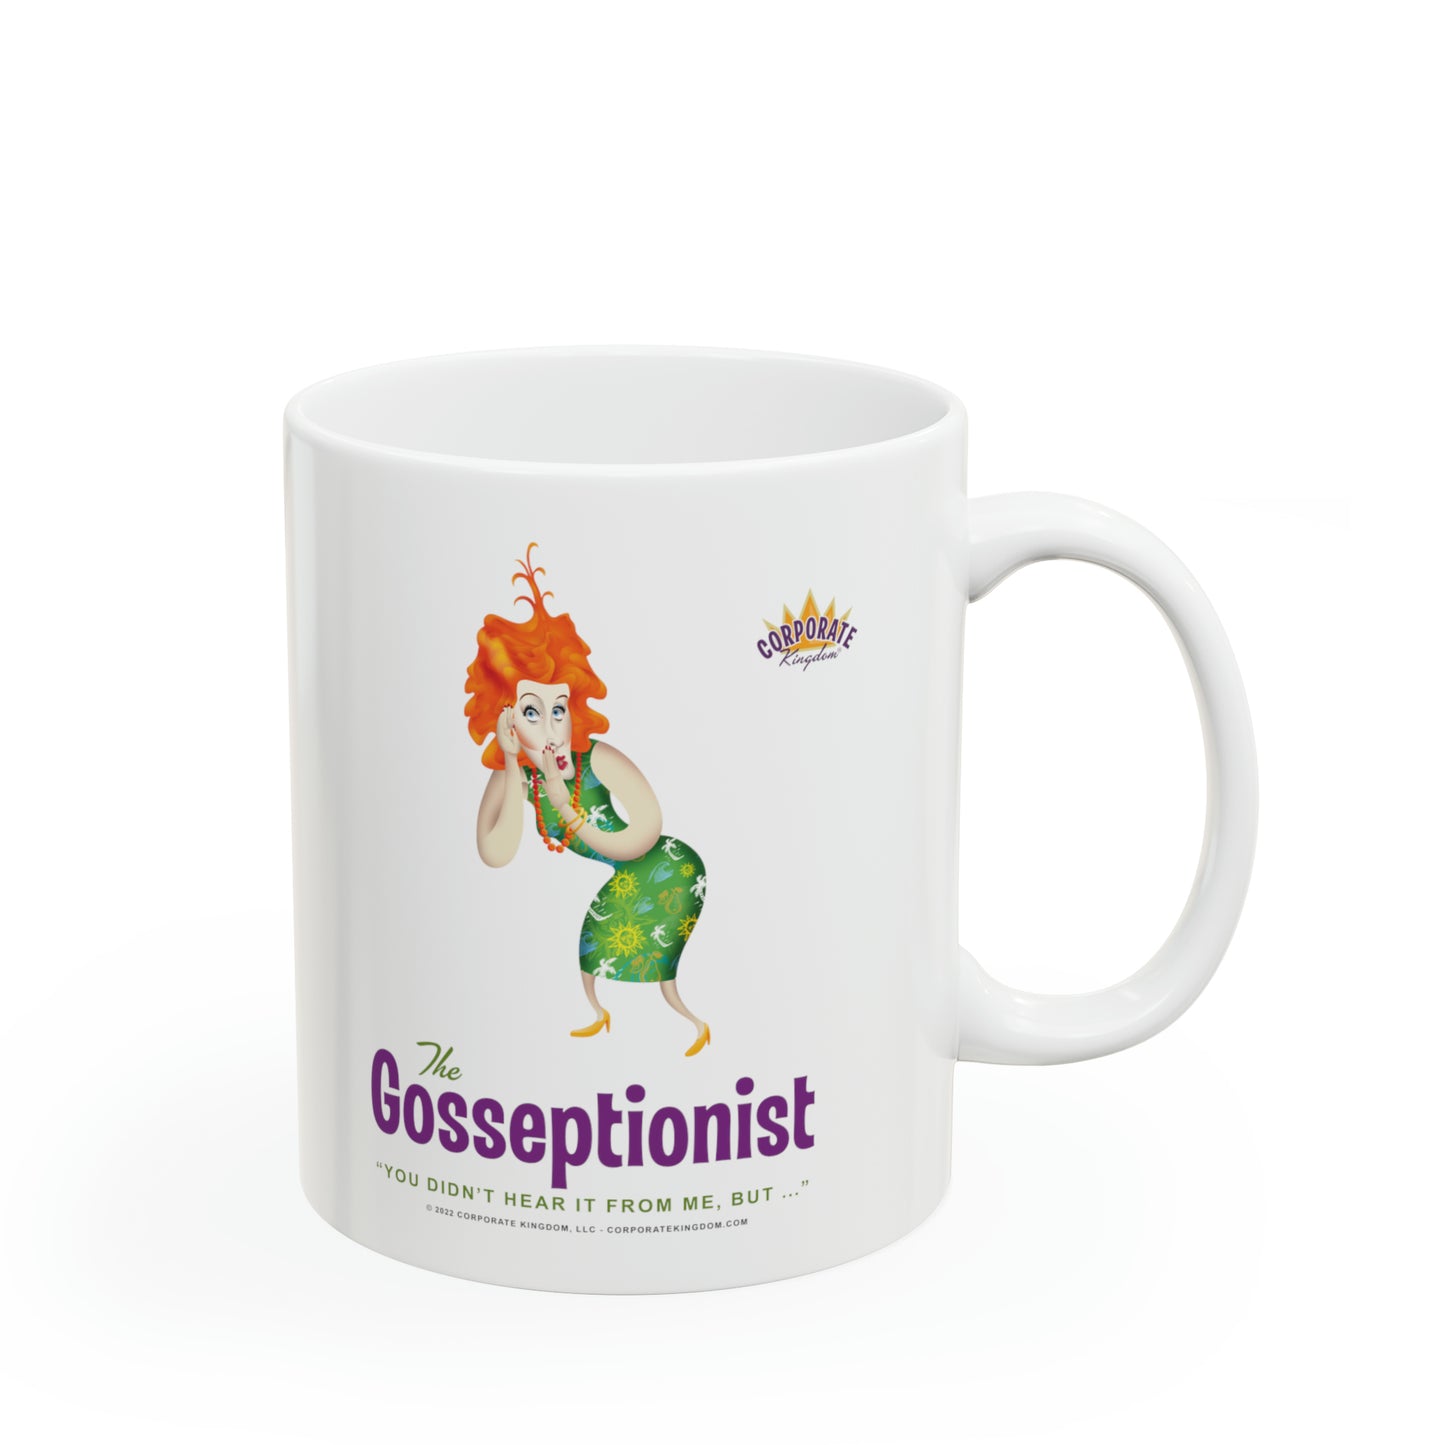 Gosseptionist Coffee Mug by Corporate Kingdom®